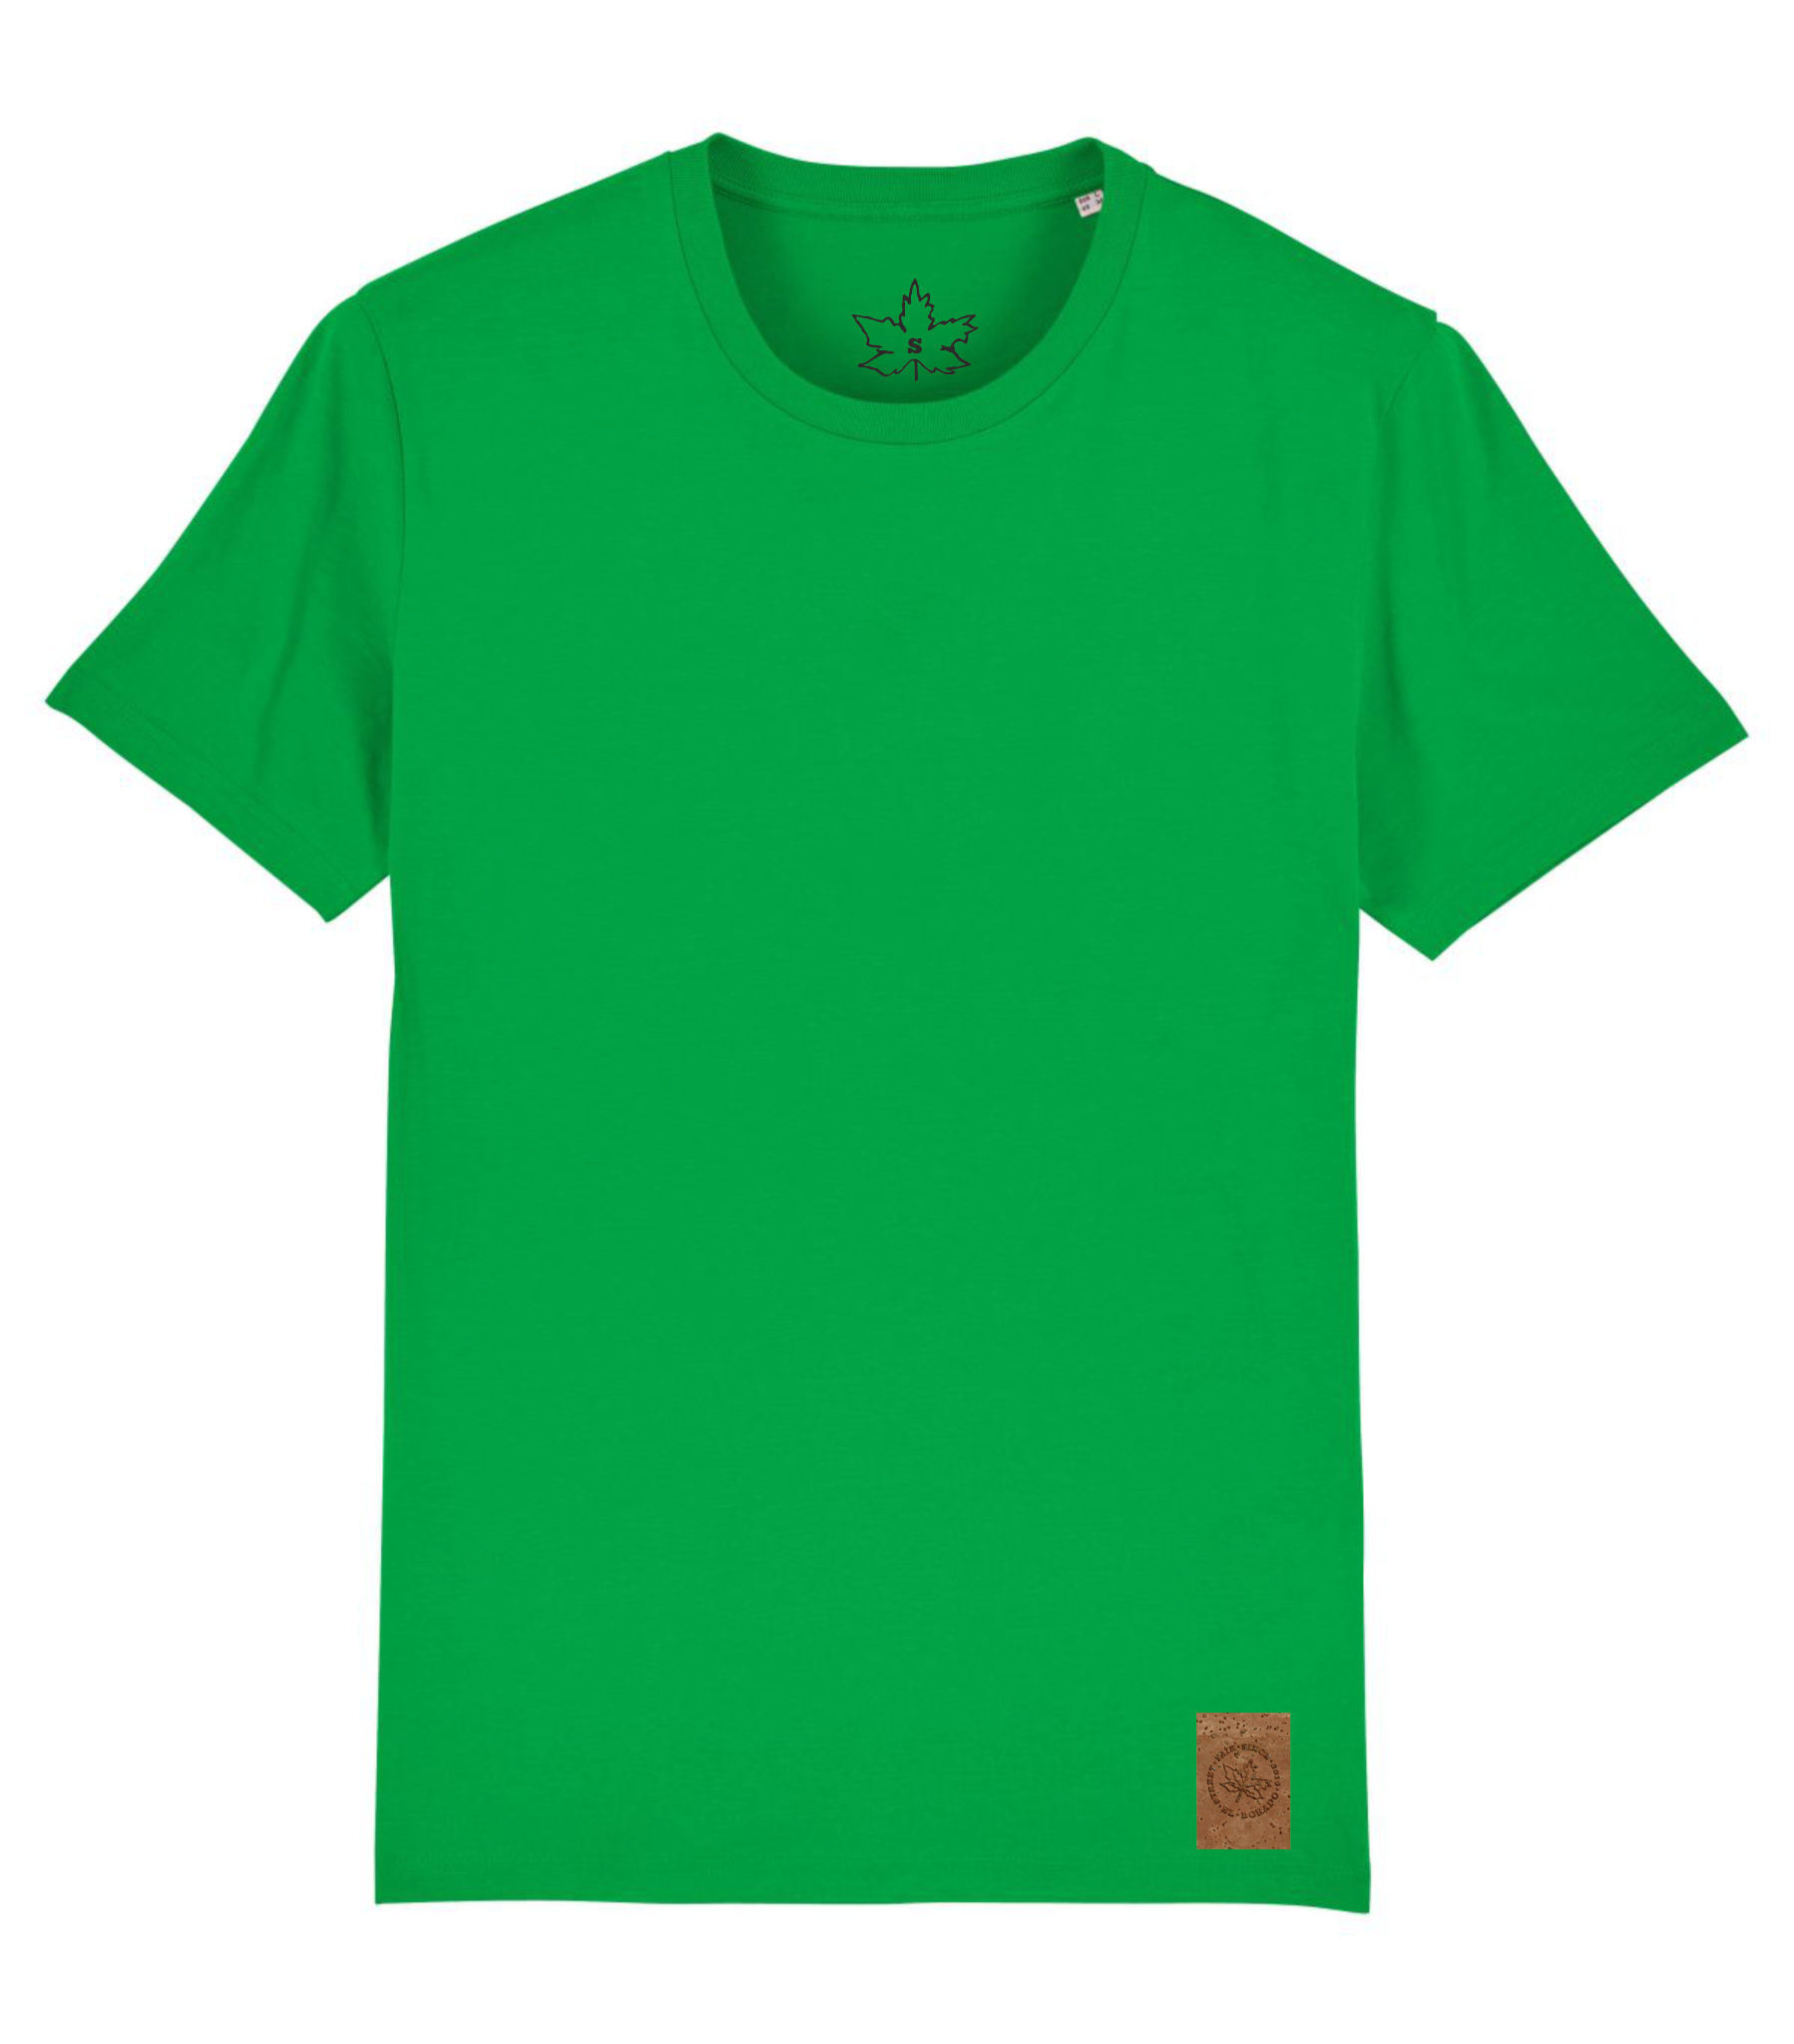 Basic Bio Herren/Unisex T-Shirt - Grünton